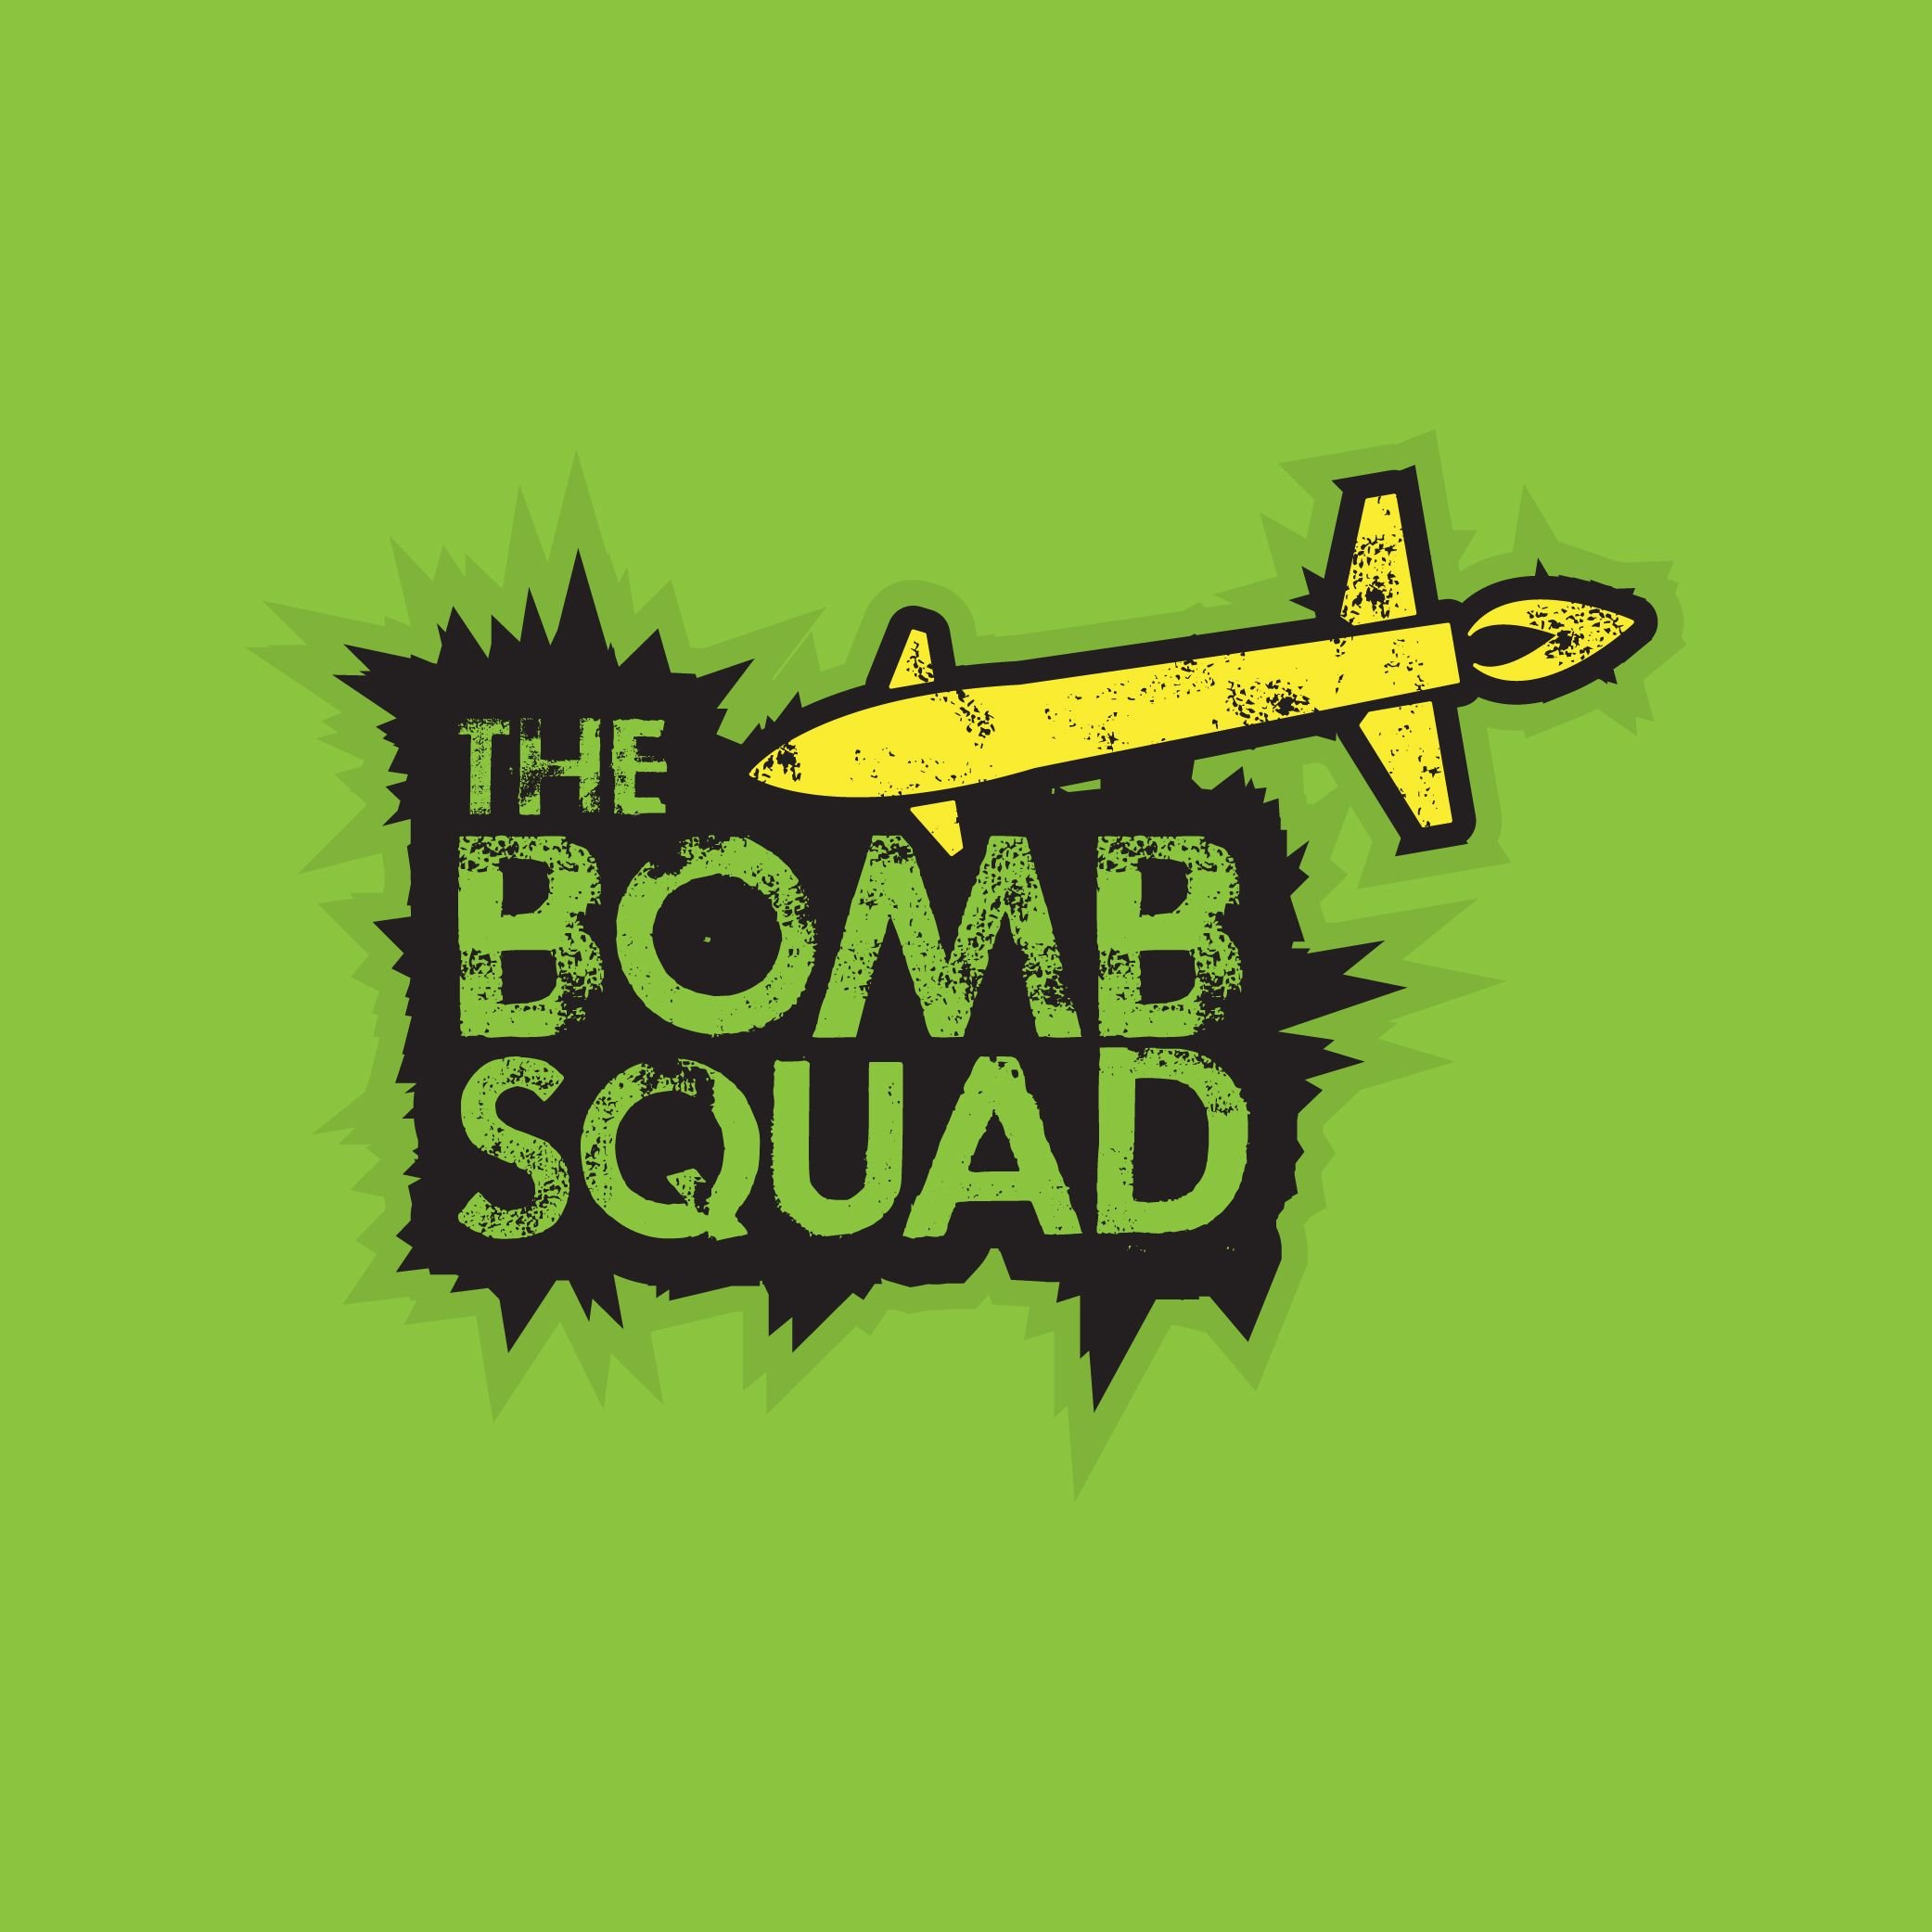 Bomb Squad Wallpaper Free Bomb Squad Background